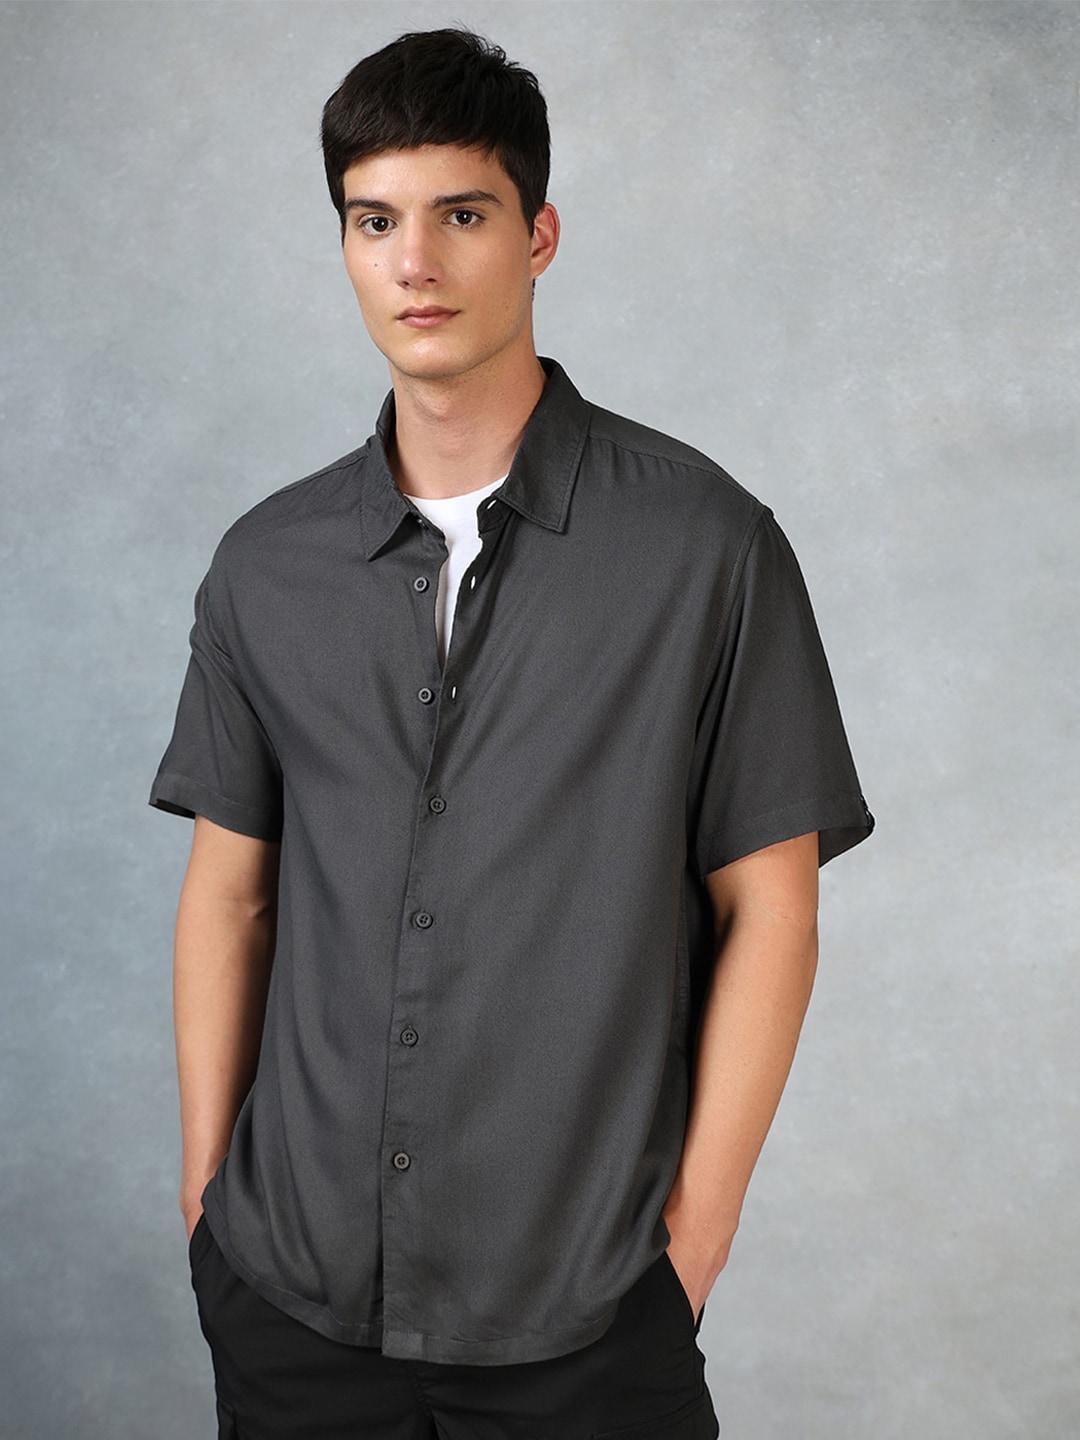 bewakoof-charcoal-opaque-oversized-casual-shirt